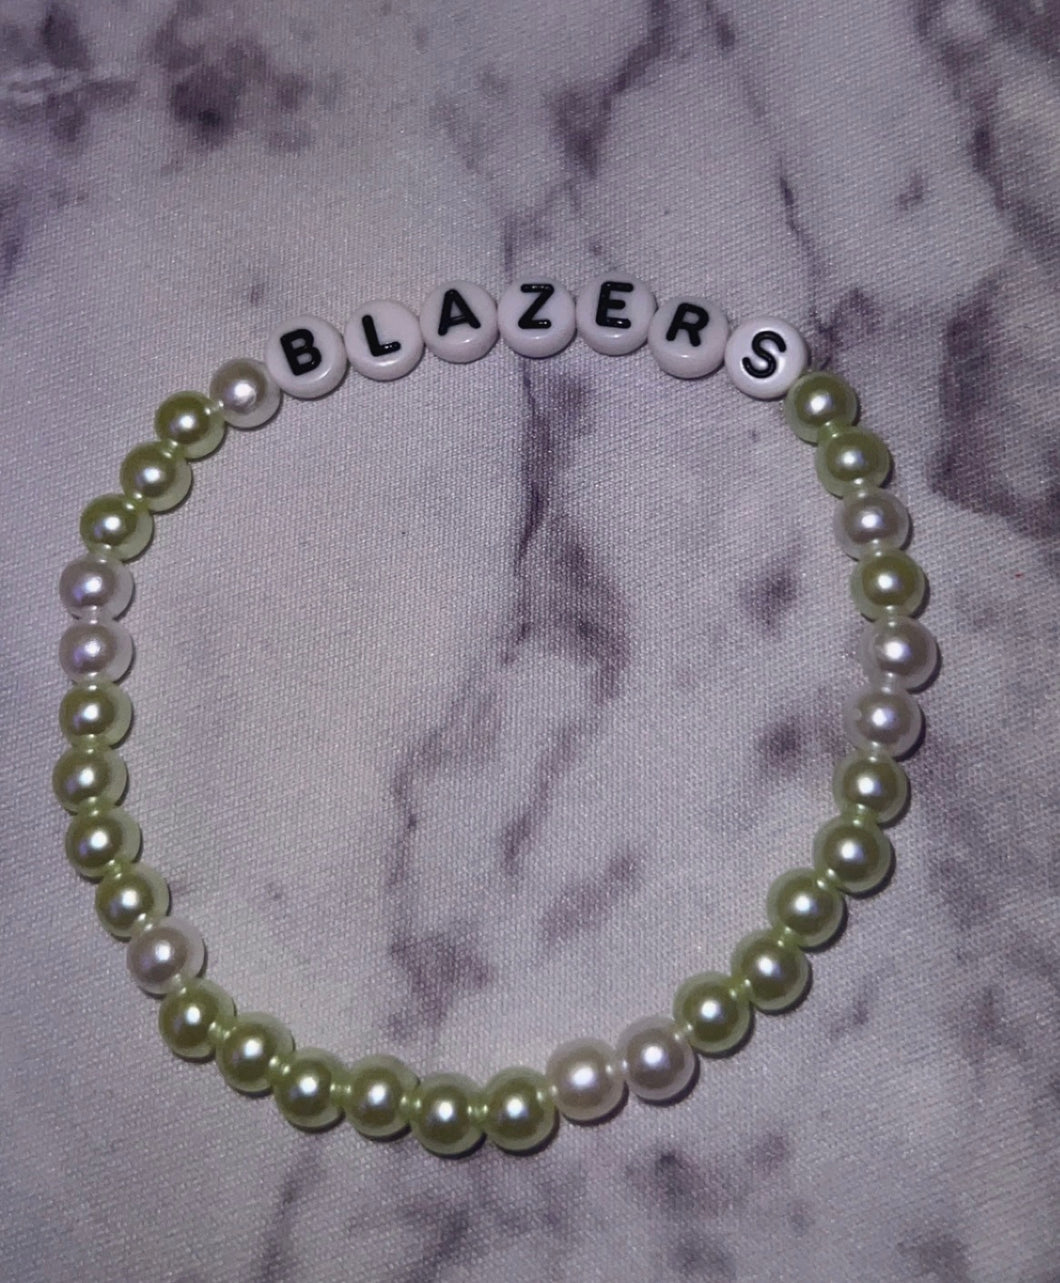 Blazers bracelet- Beaded by SN